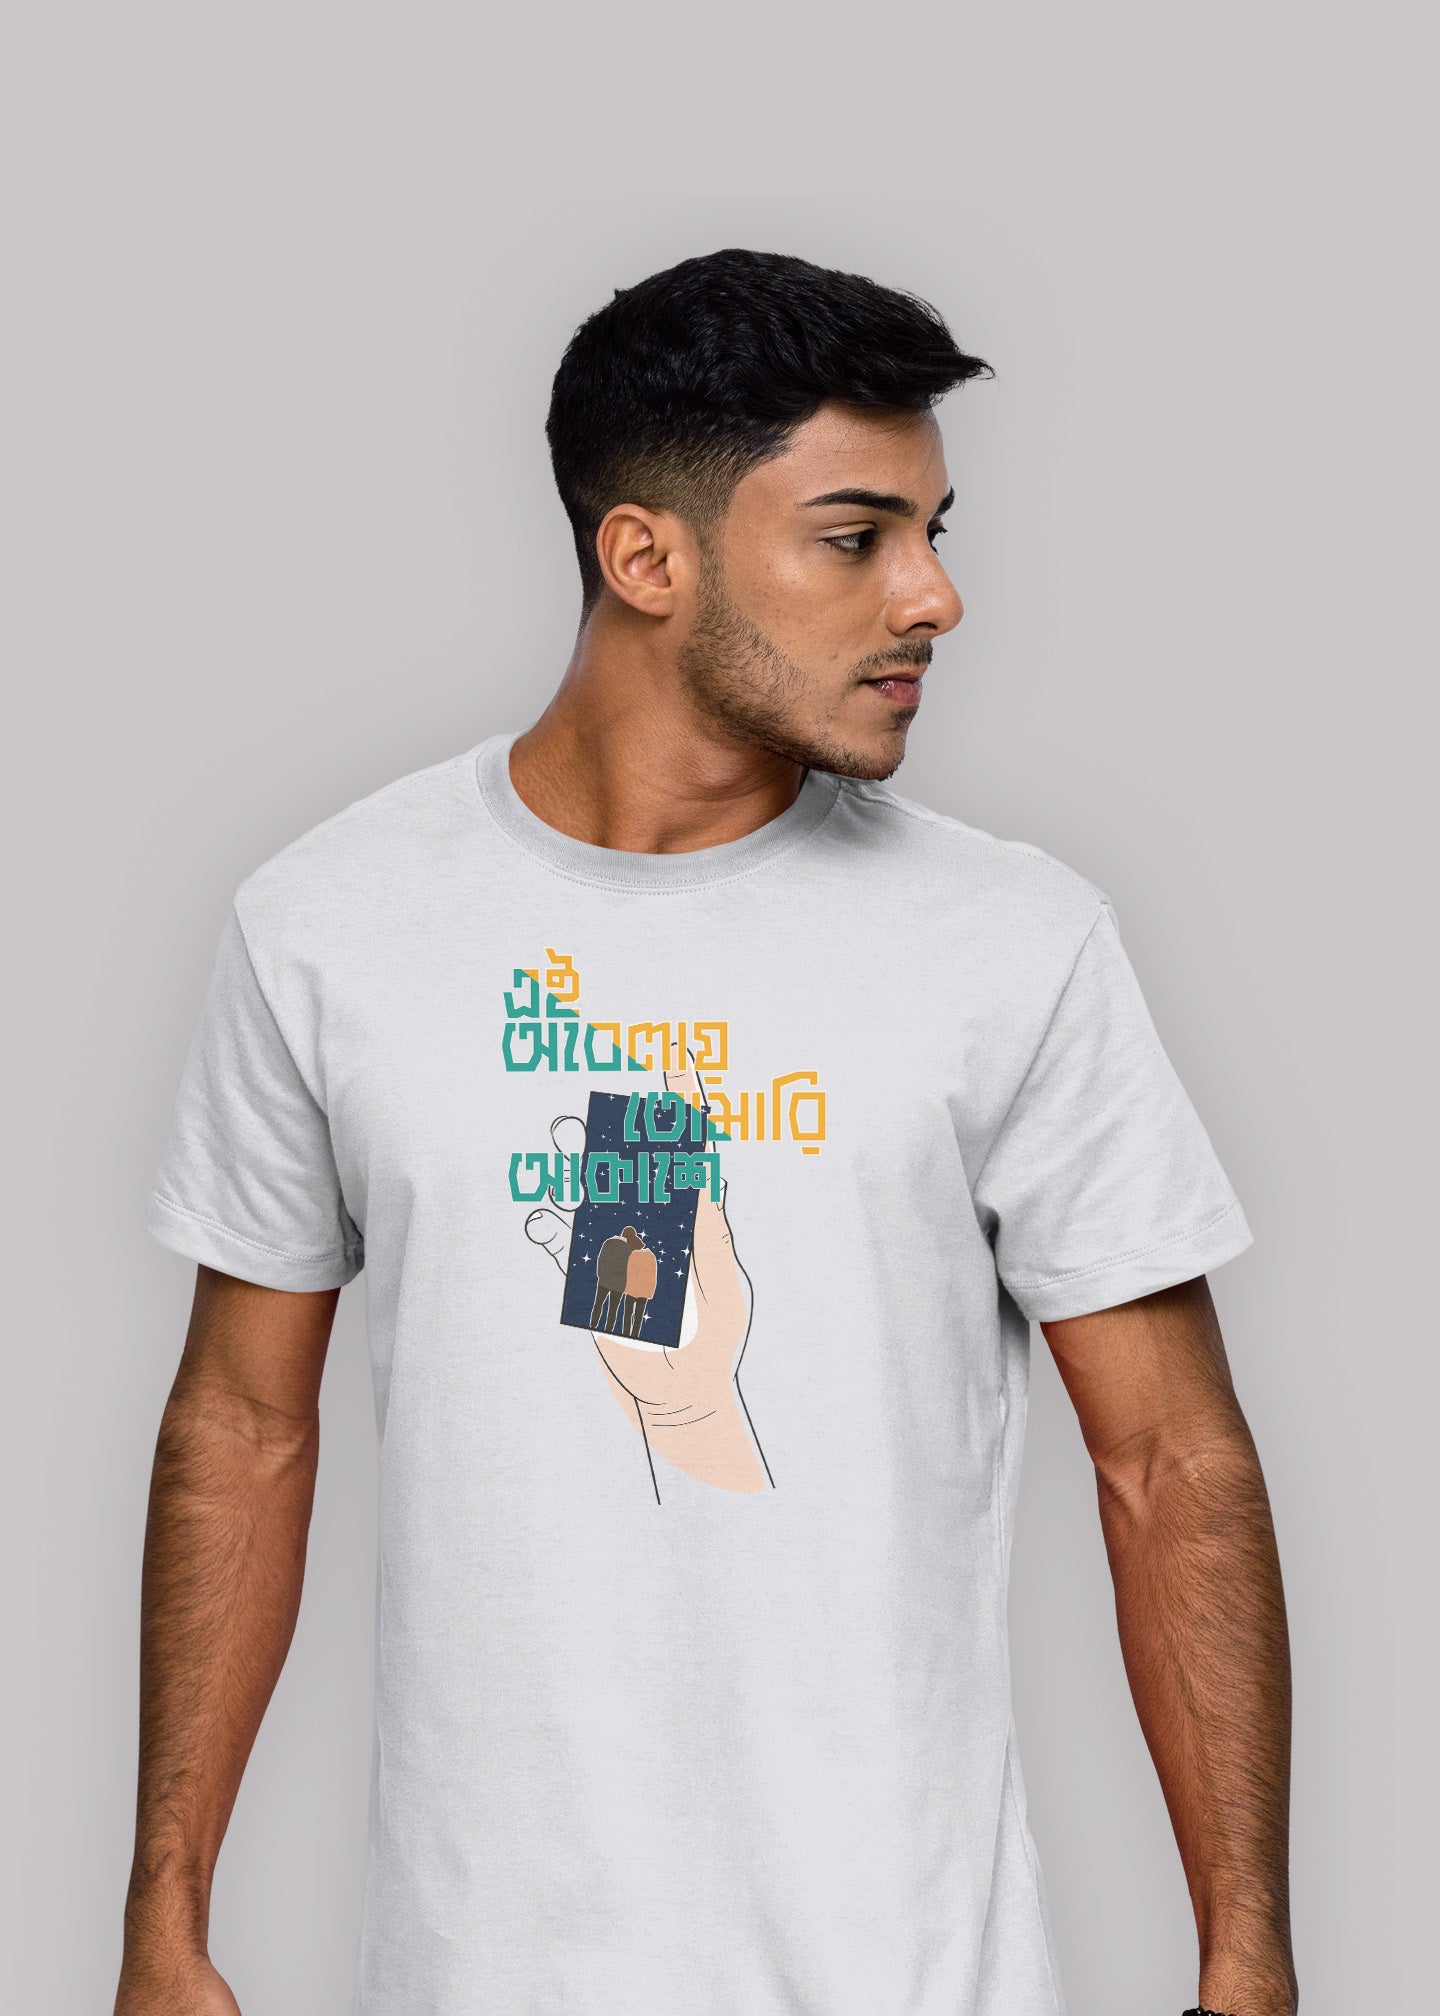 Ei obelay bengali Printed Half Sleeve Premium Cotton T-shirt For Men